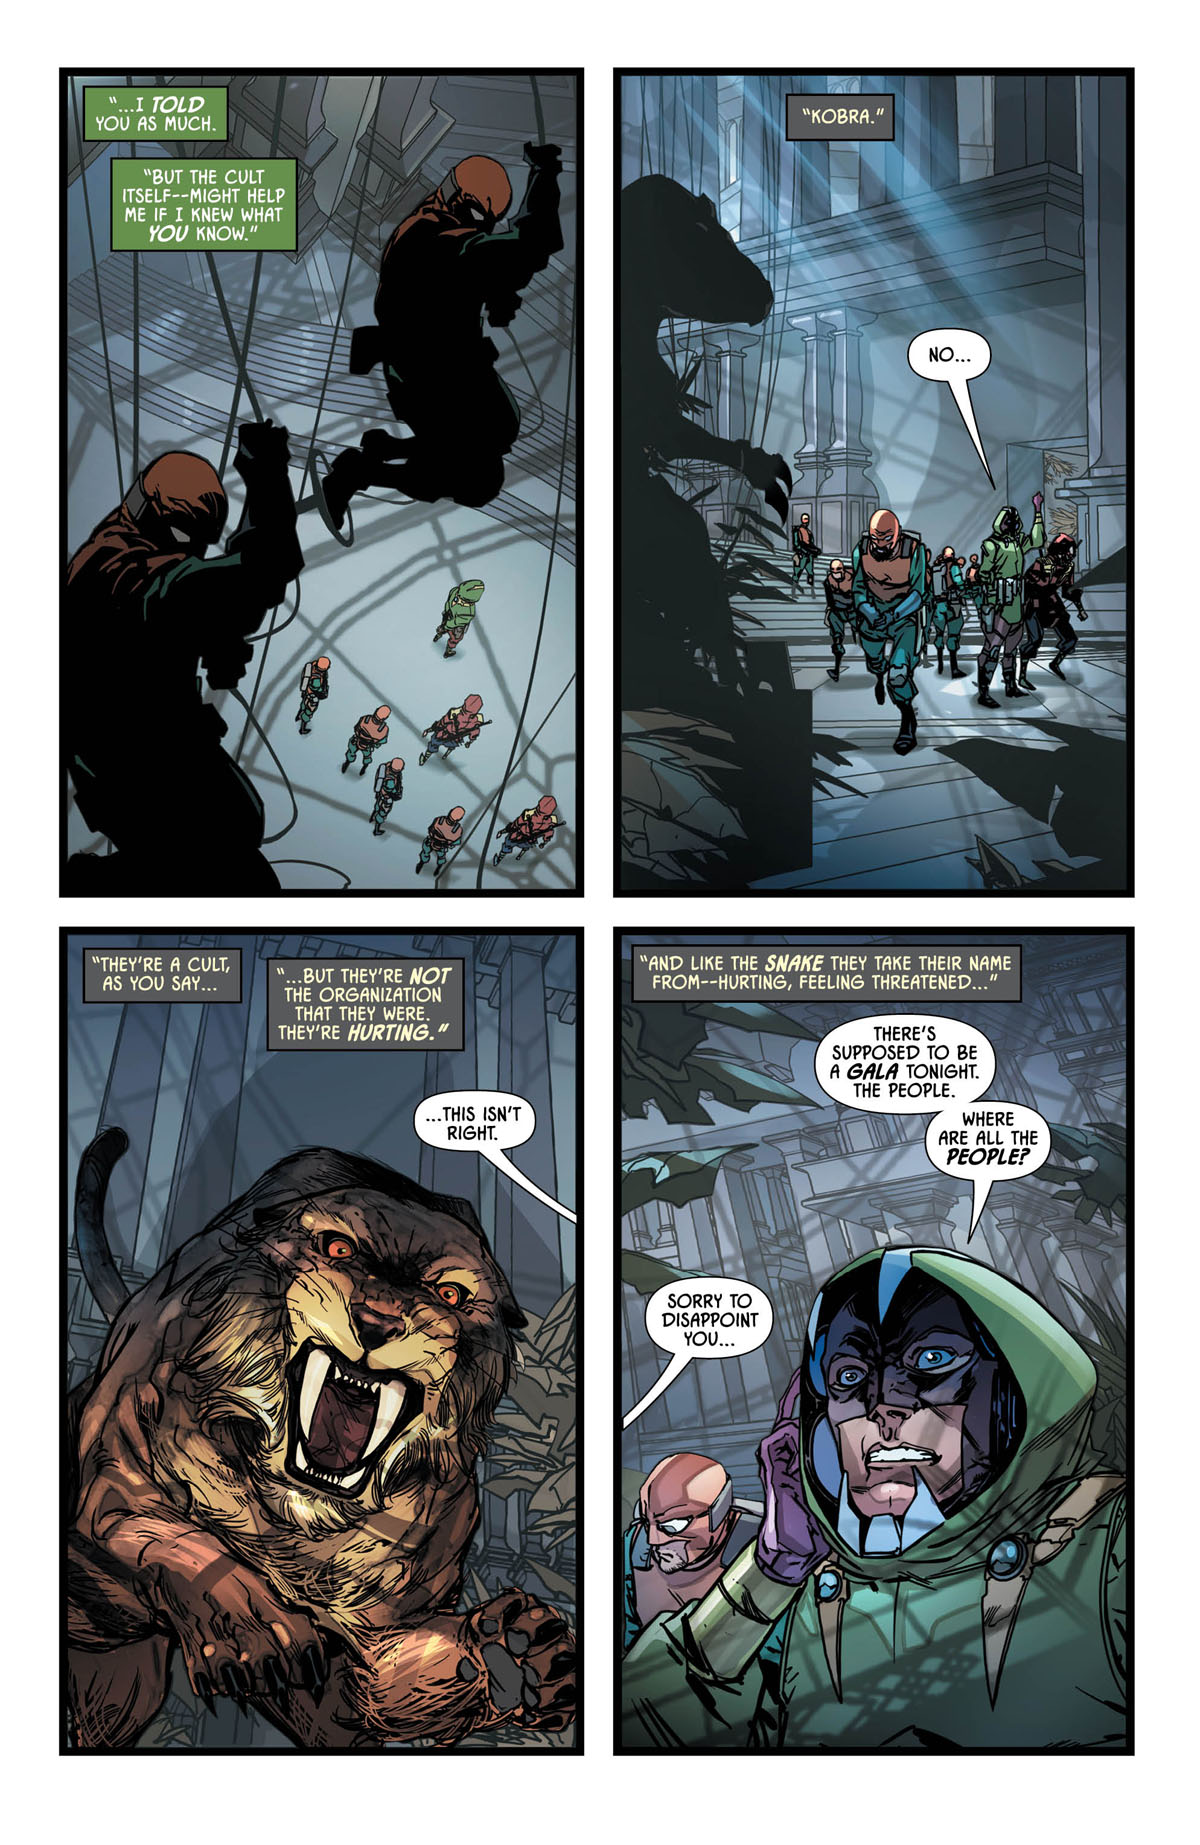 Detective Comics #992 page 3